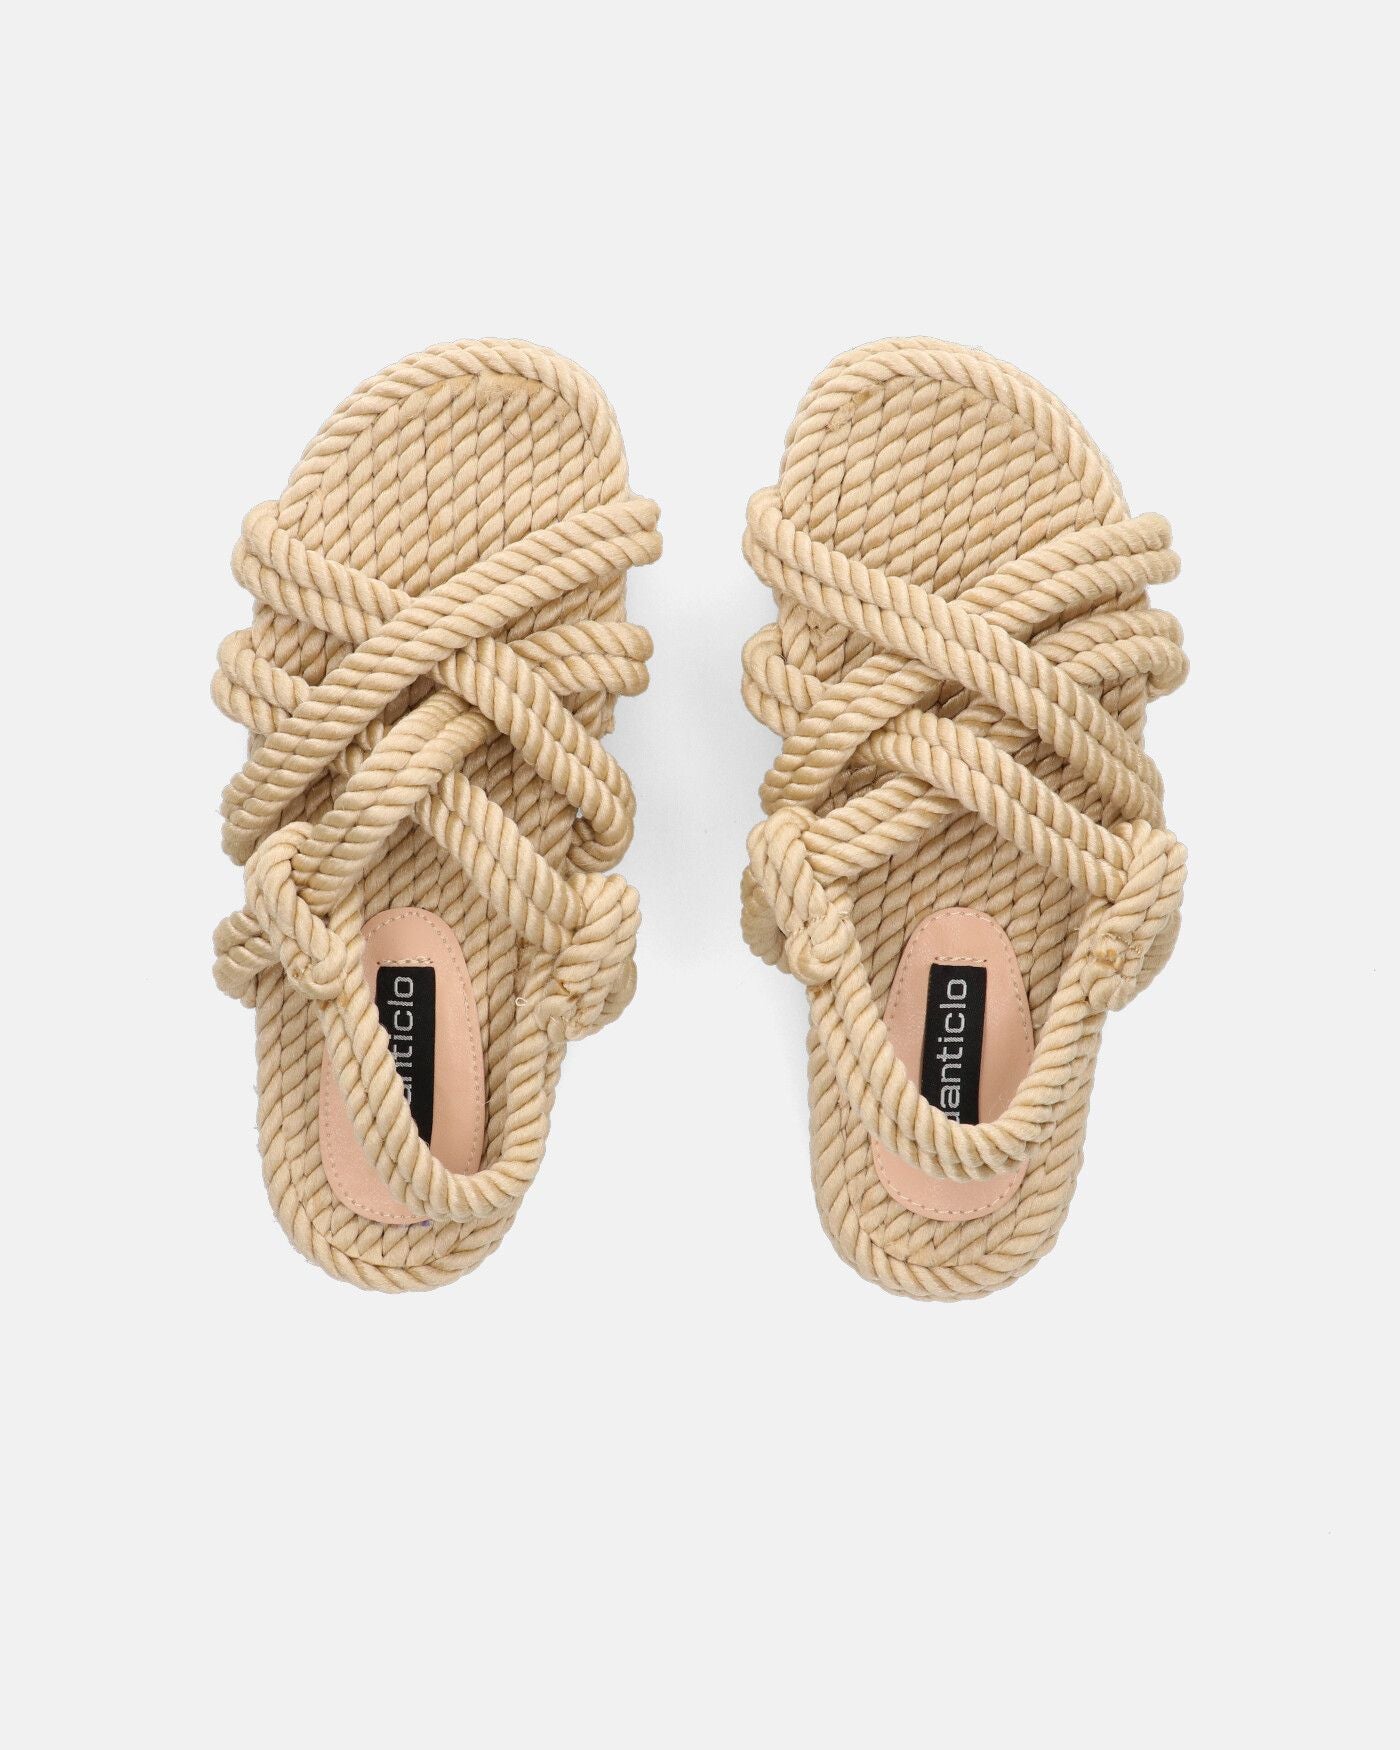 MARIYA - sandalias beige de cuerda trenzada